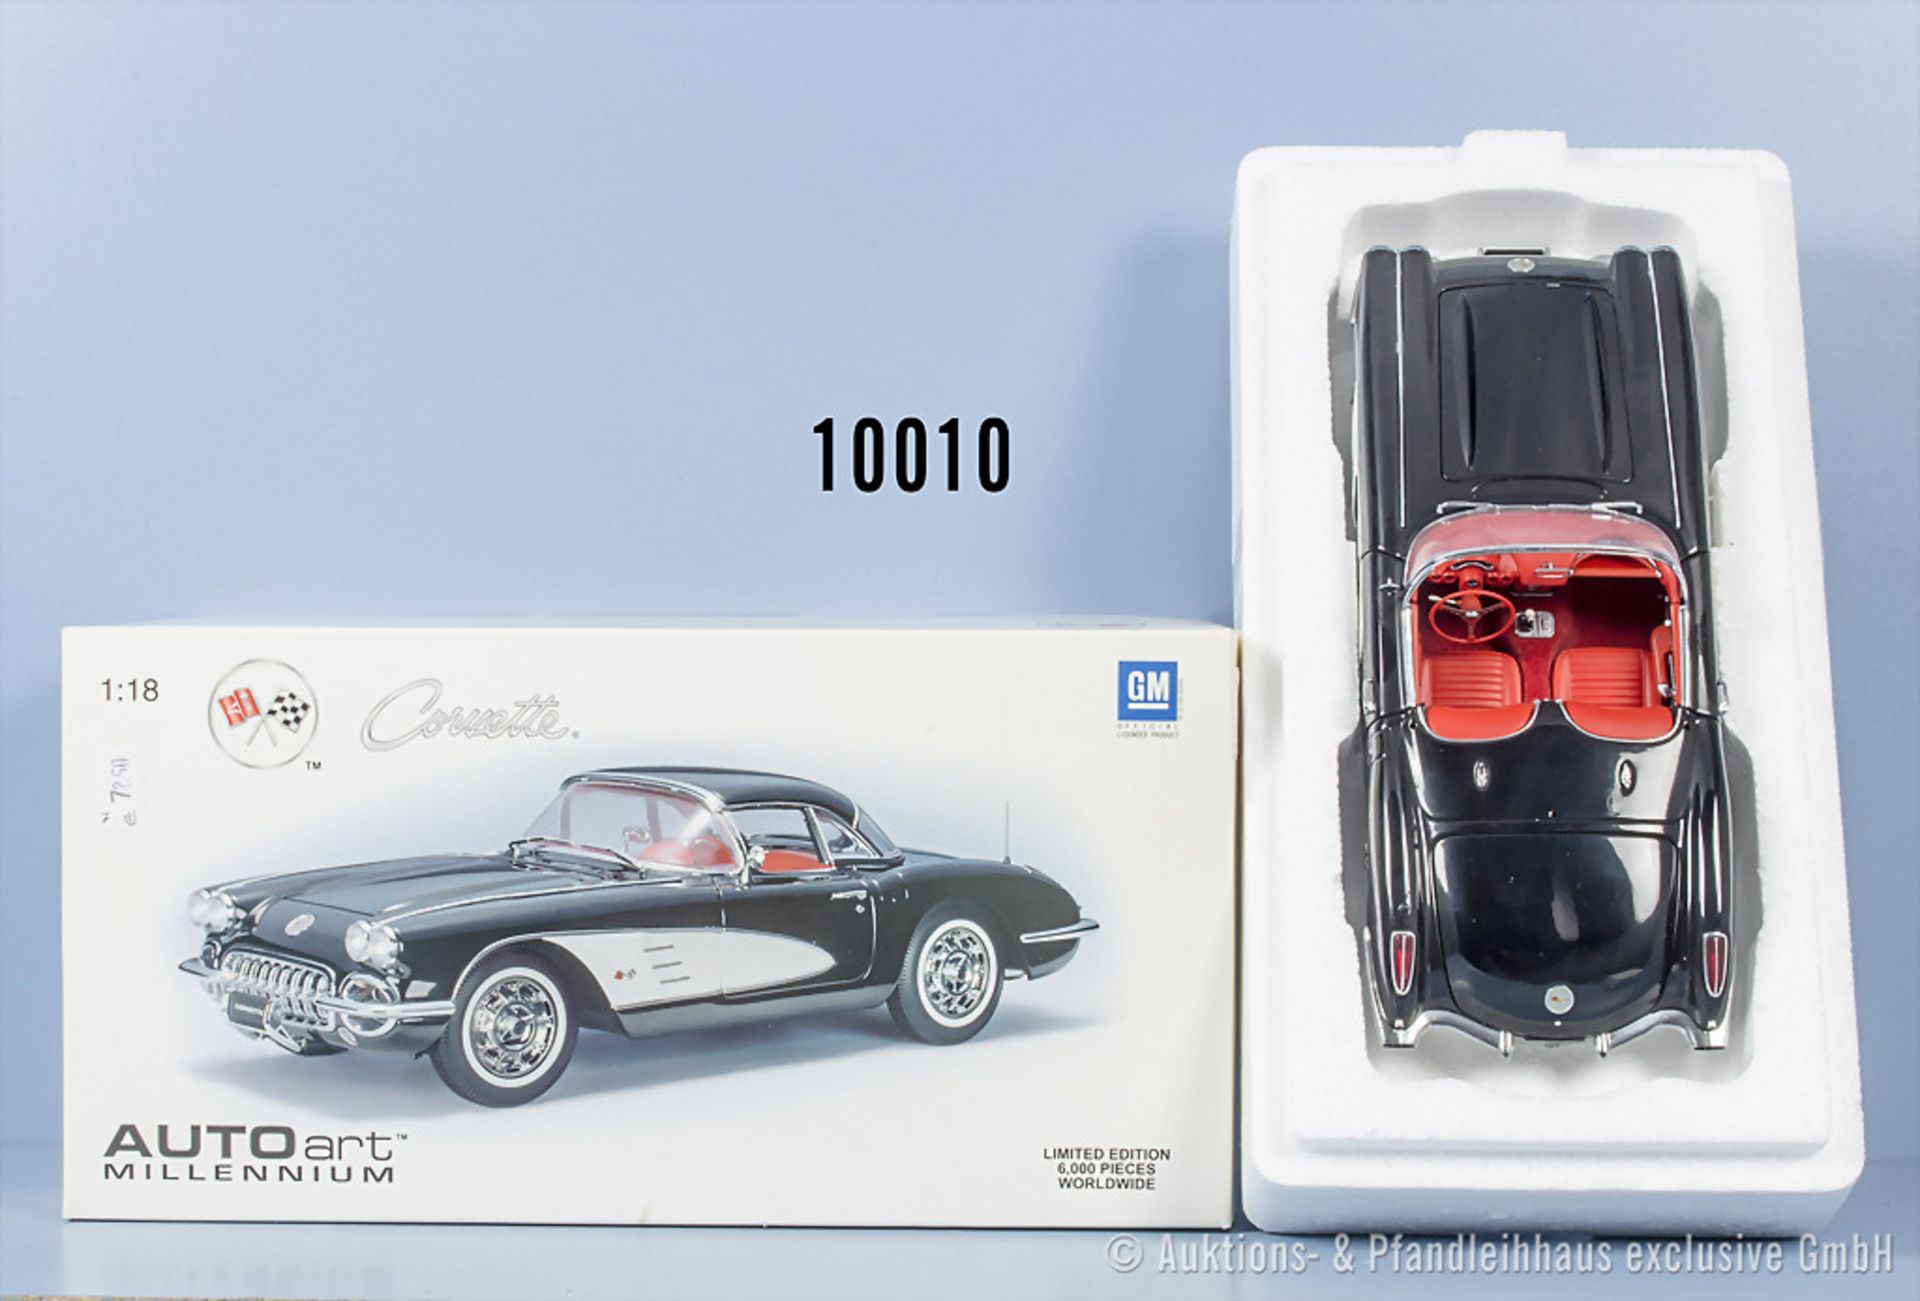 Autoart Millenium 71142 Chevrolet Corvette 1959 (Tuxedo Black), Metall, 1:18, Z 0, ...